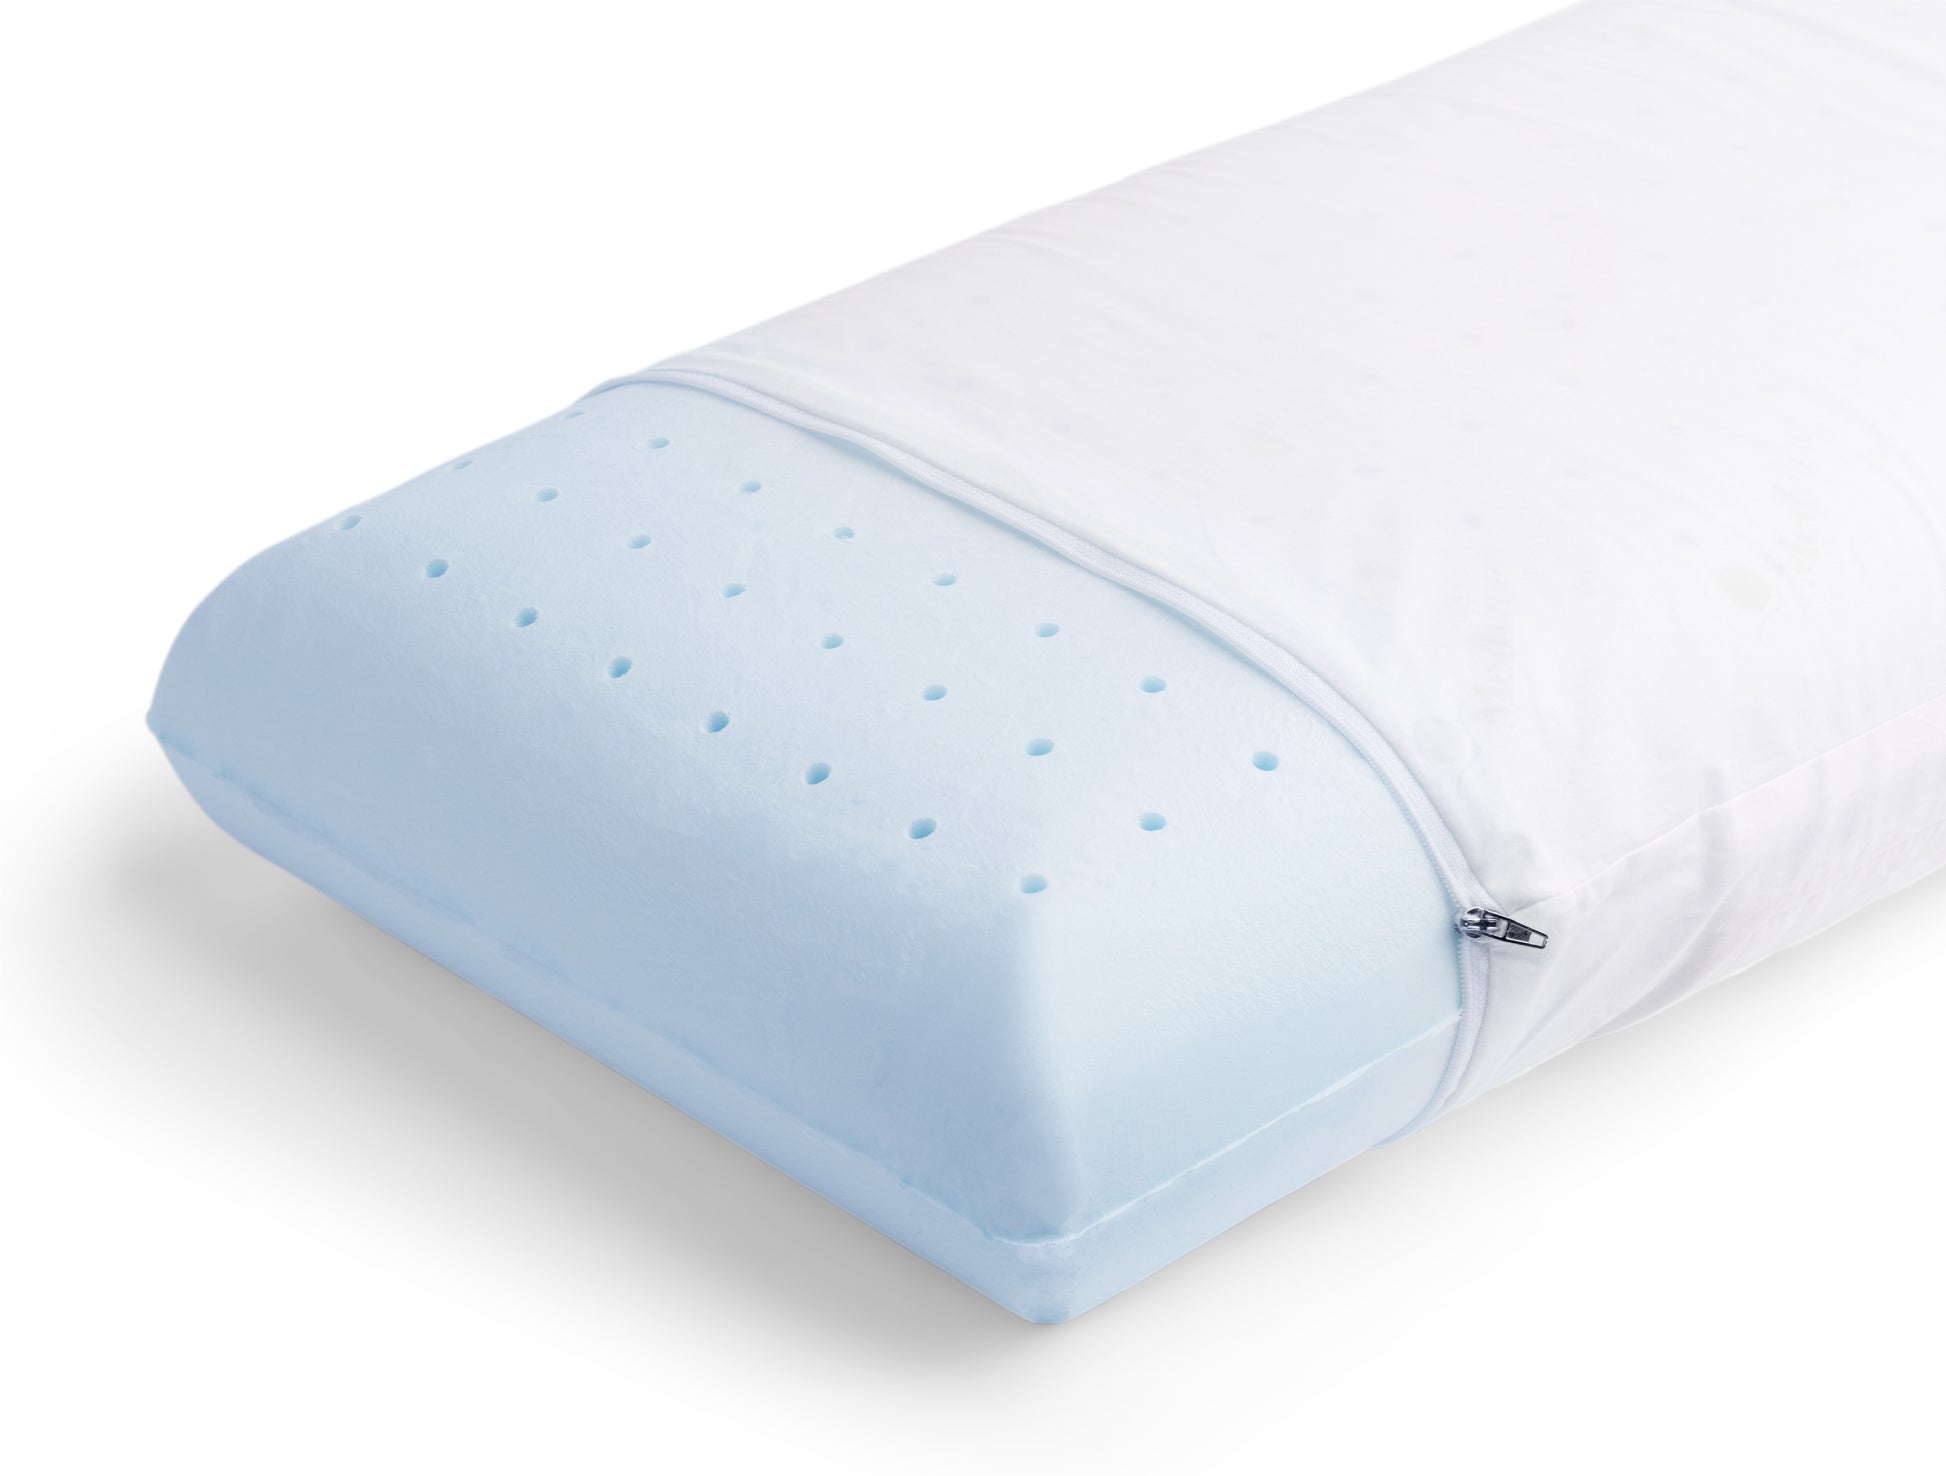 Water Sleeping Pillow - FOMI Care